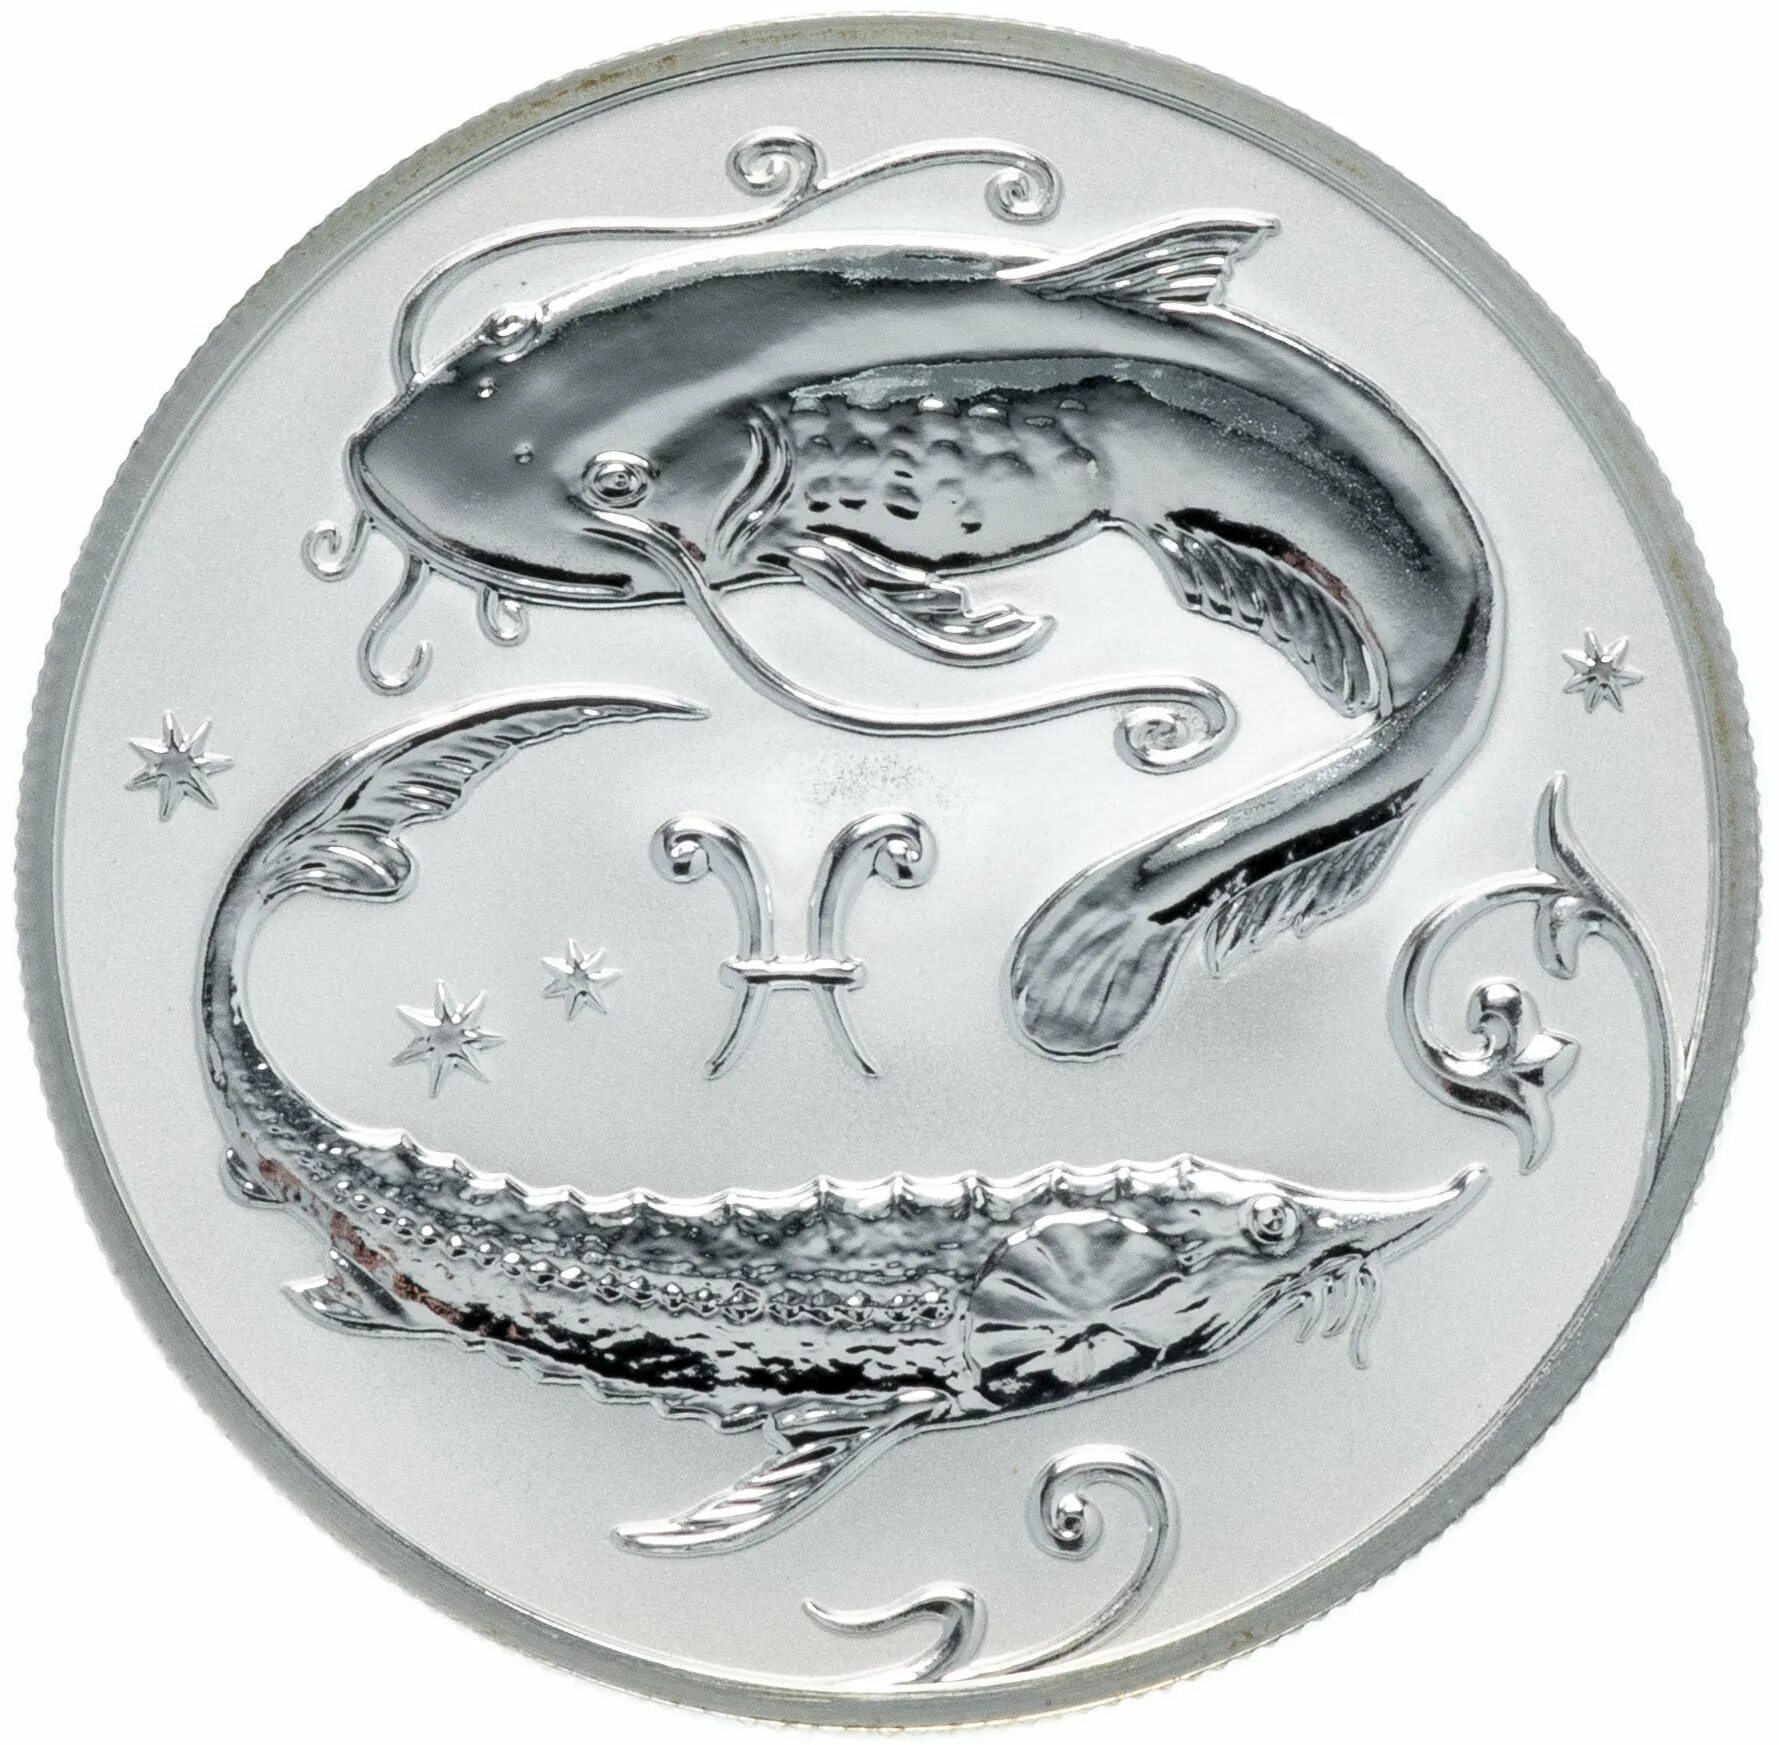 Монеты Созвездие серебро 2 рубля рыбы. Два рубля серебро 2005 рыбы. Монета 2 рубля 2005 года серебро. Серебряная монета рыбы. Камень талисман знака рыбы